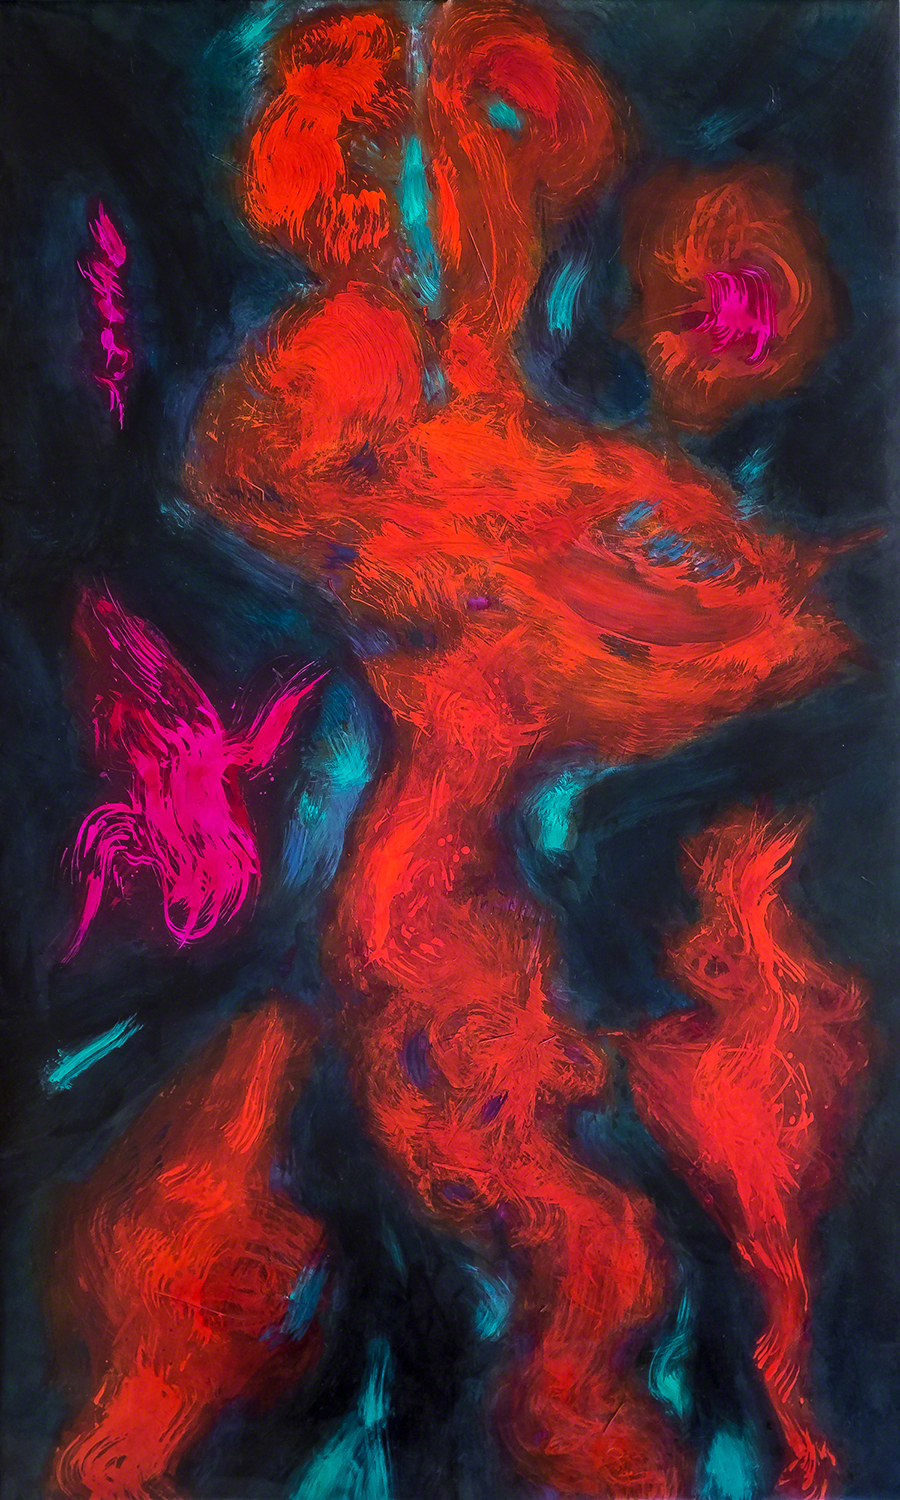 SELVA - 200 x 120 cm, acrylic on canvas, 2020.